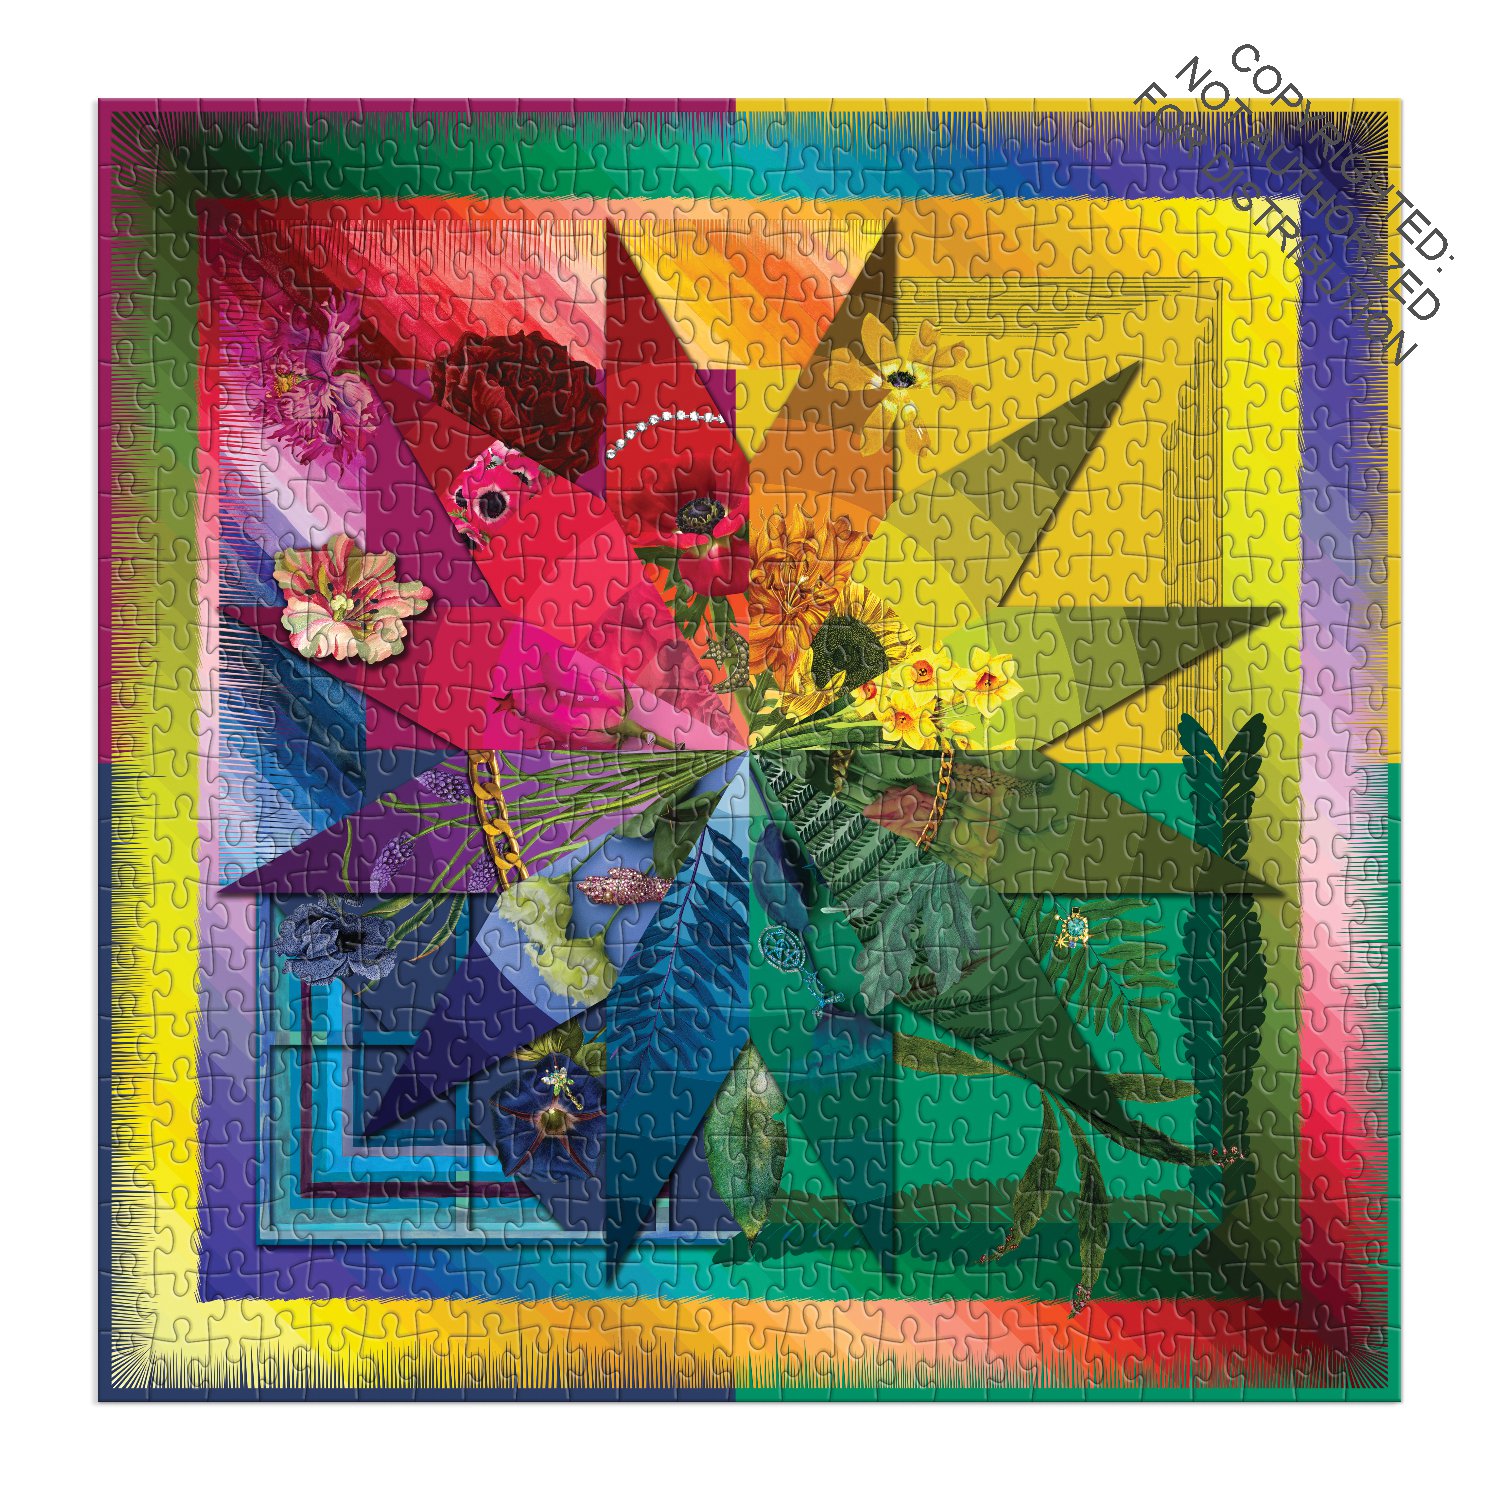 Christian Lacroix Botanic Rainbow 500 Piece Double-Sided Puzzle